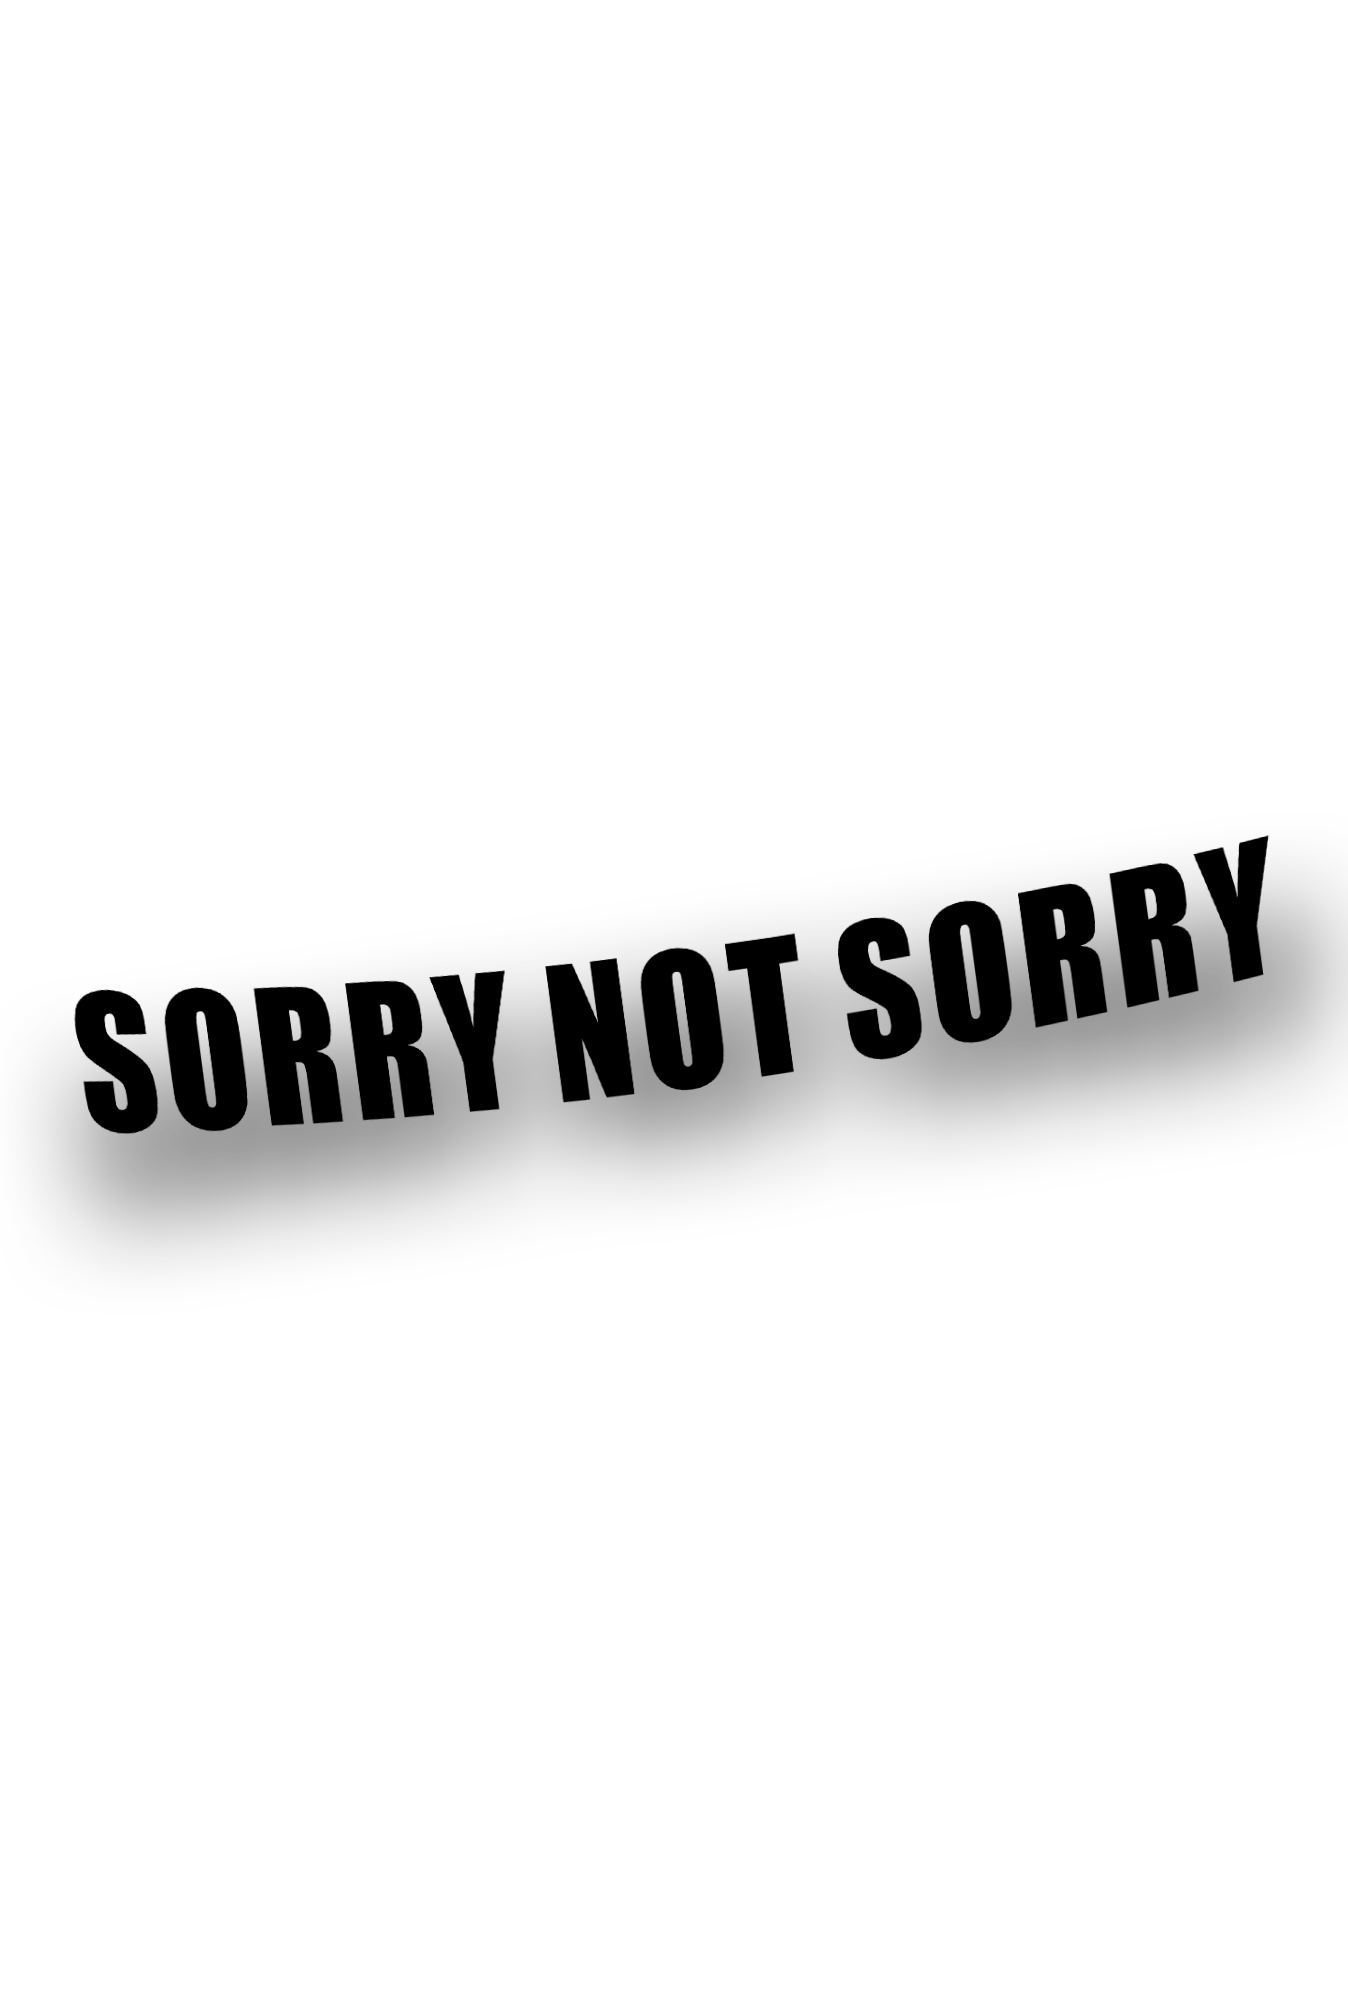 ''Sorry not sorry'' - Plotted Vinyl Sticker